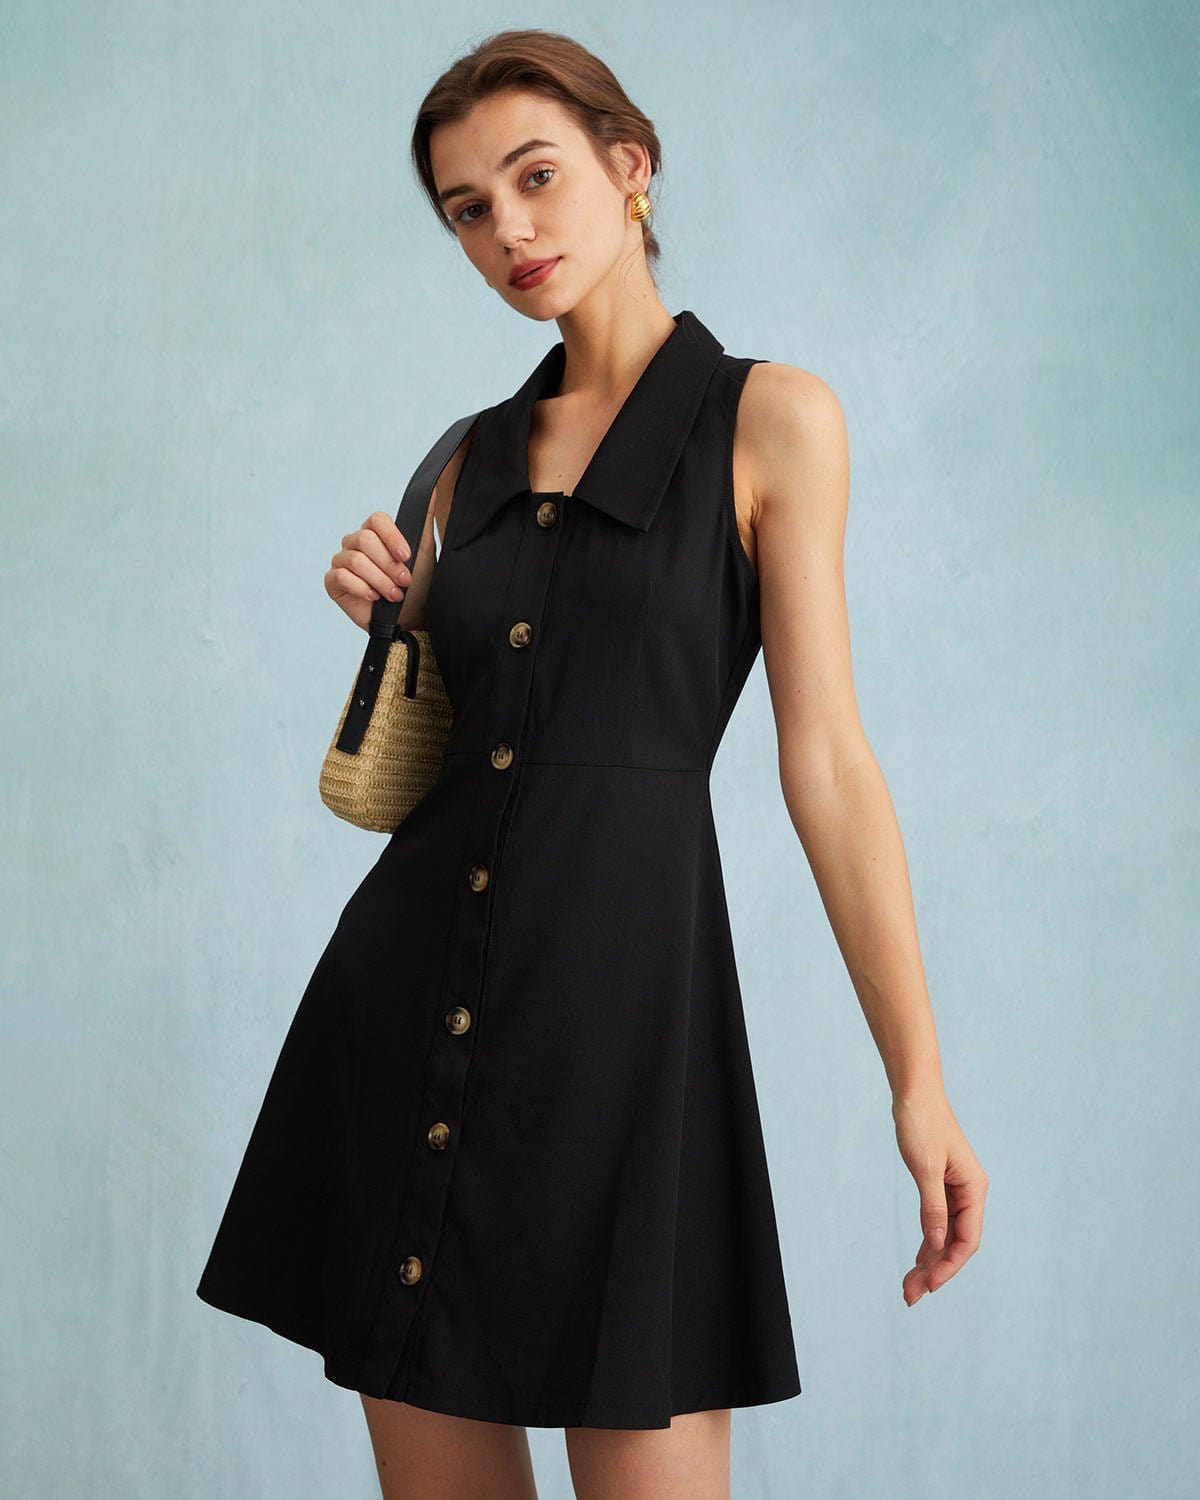 The Black Collared Sleeveless A Line Shirt Mini Dress - Black